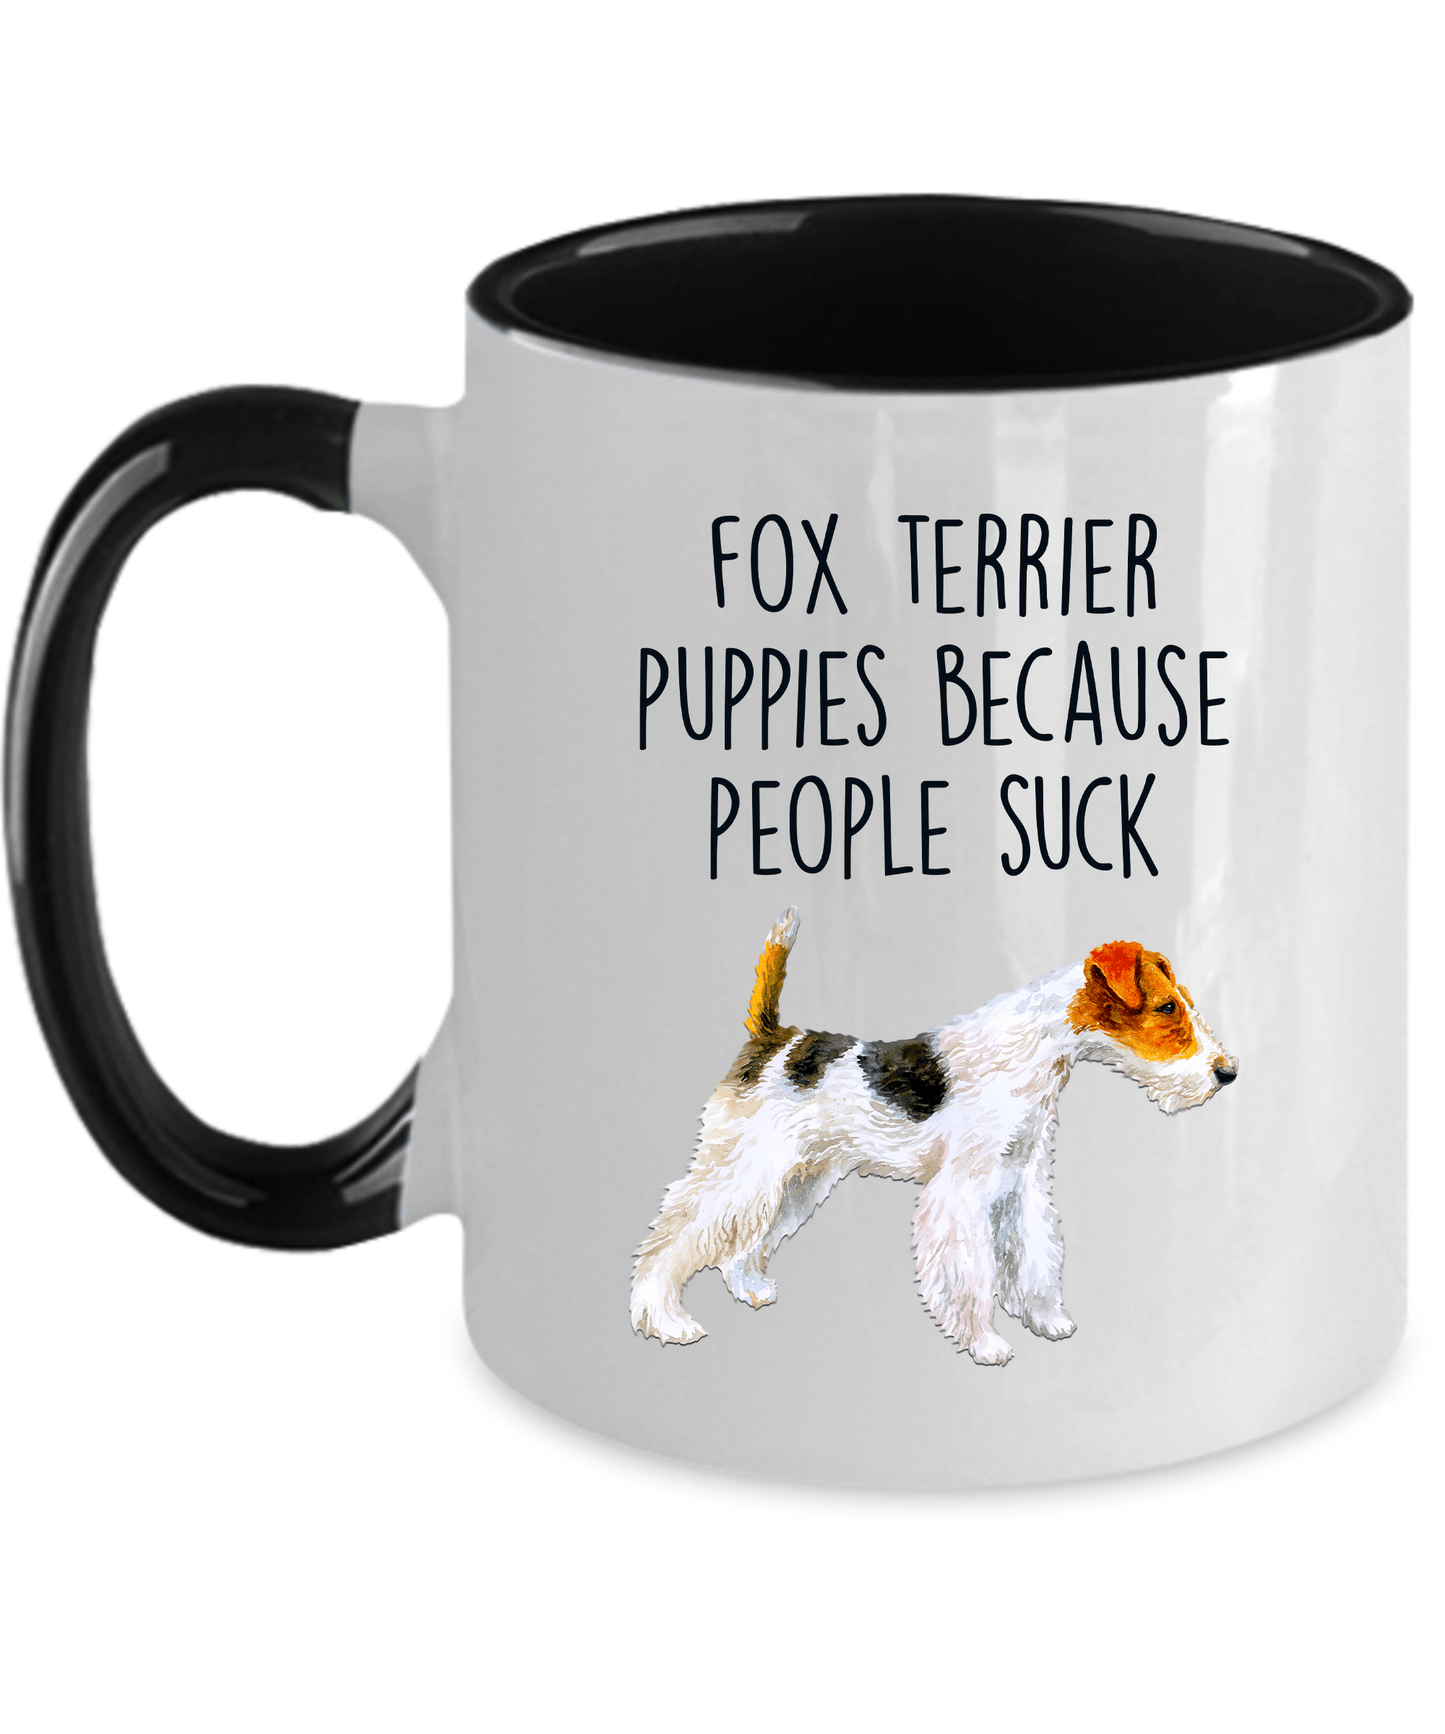 Fox Terrier Puppies Because People Suck Funny Ceramic Coffee Mug